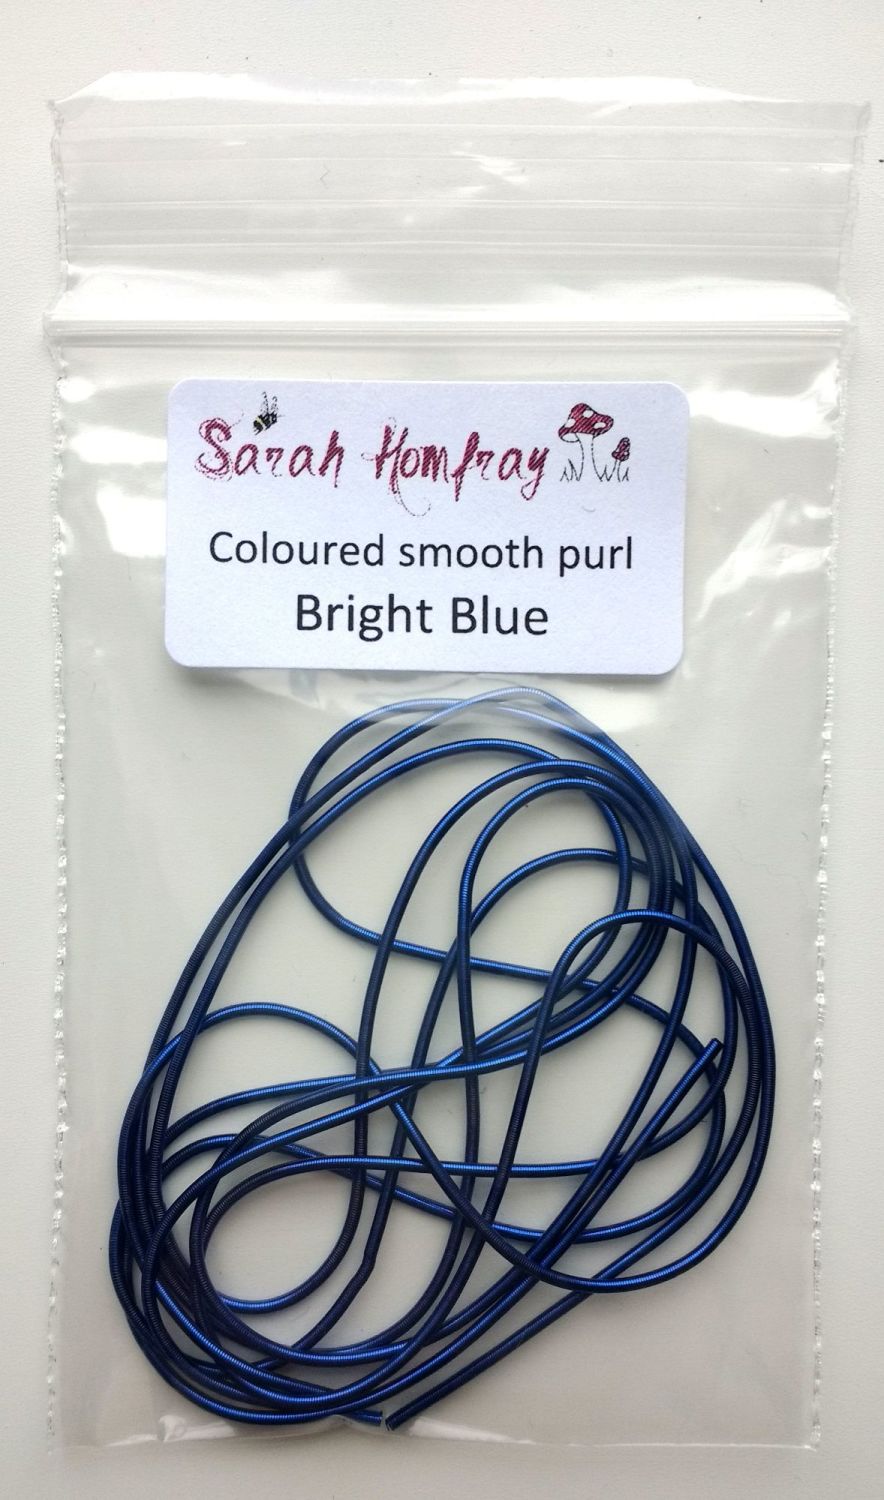 NEW! Coloured smooth purl no.6 - Bright Blue